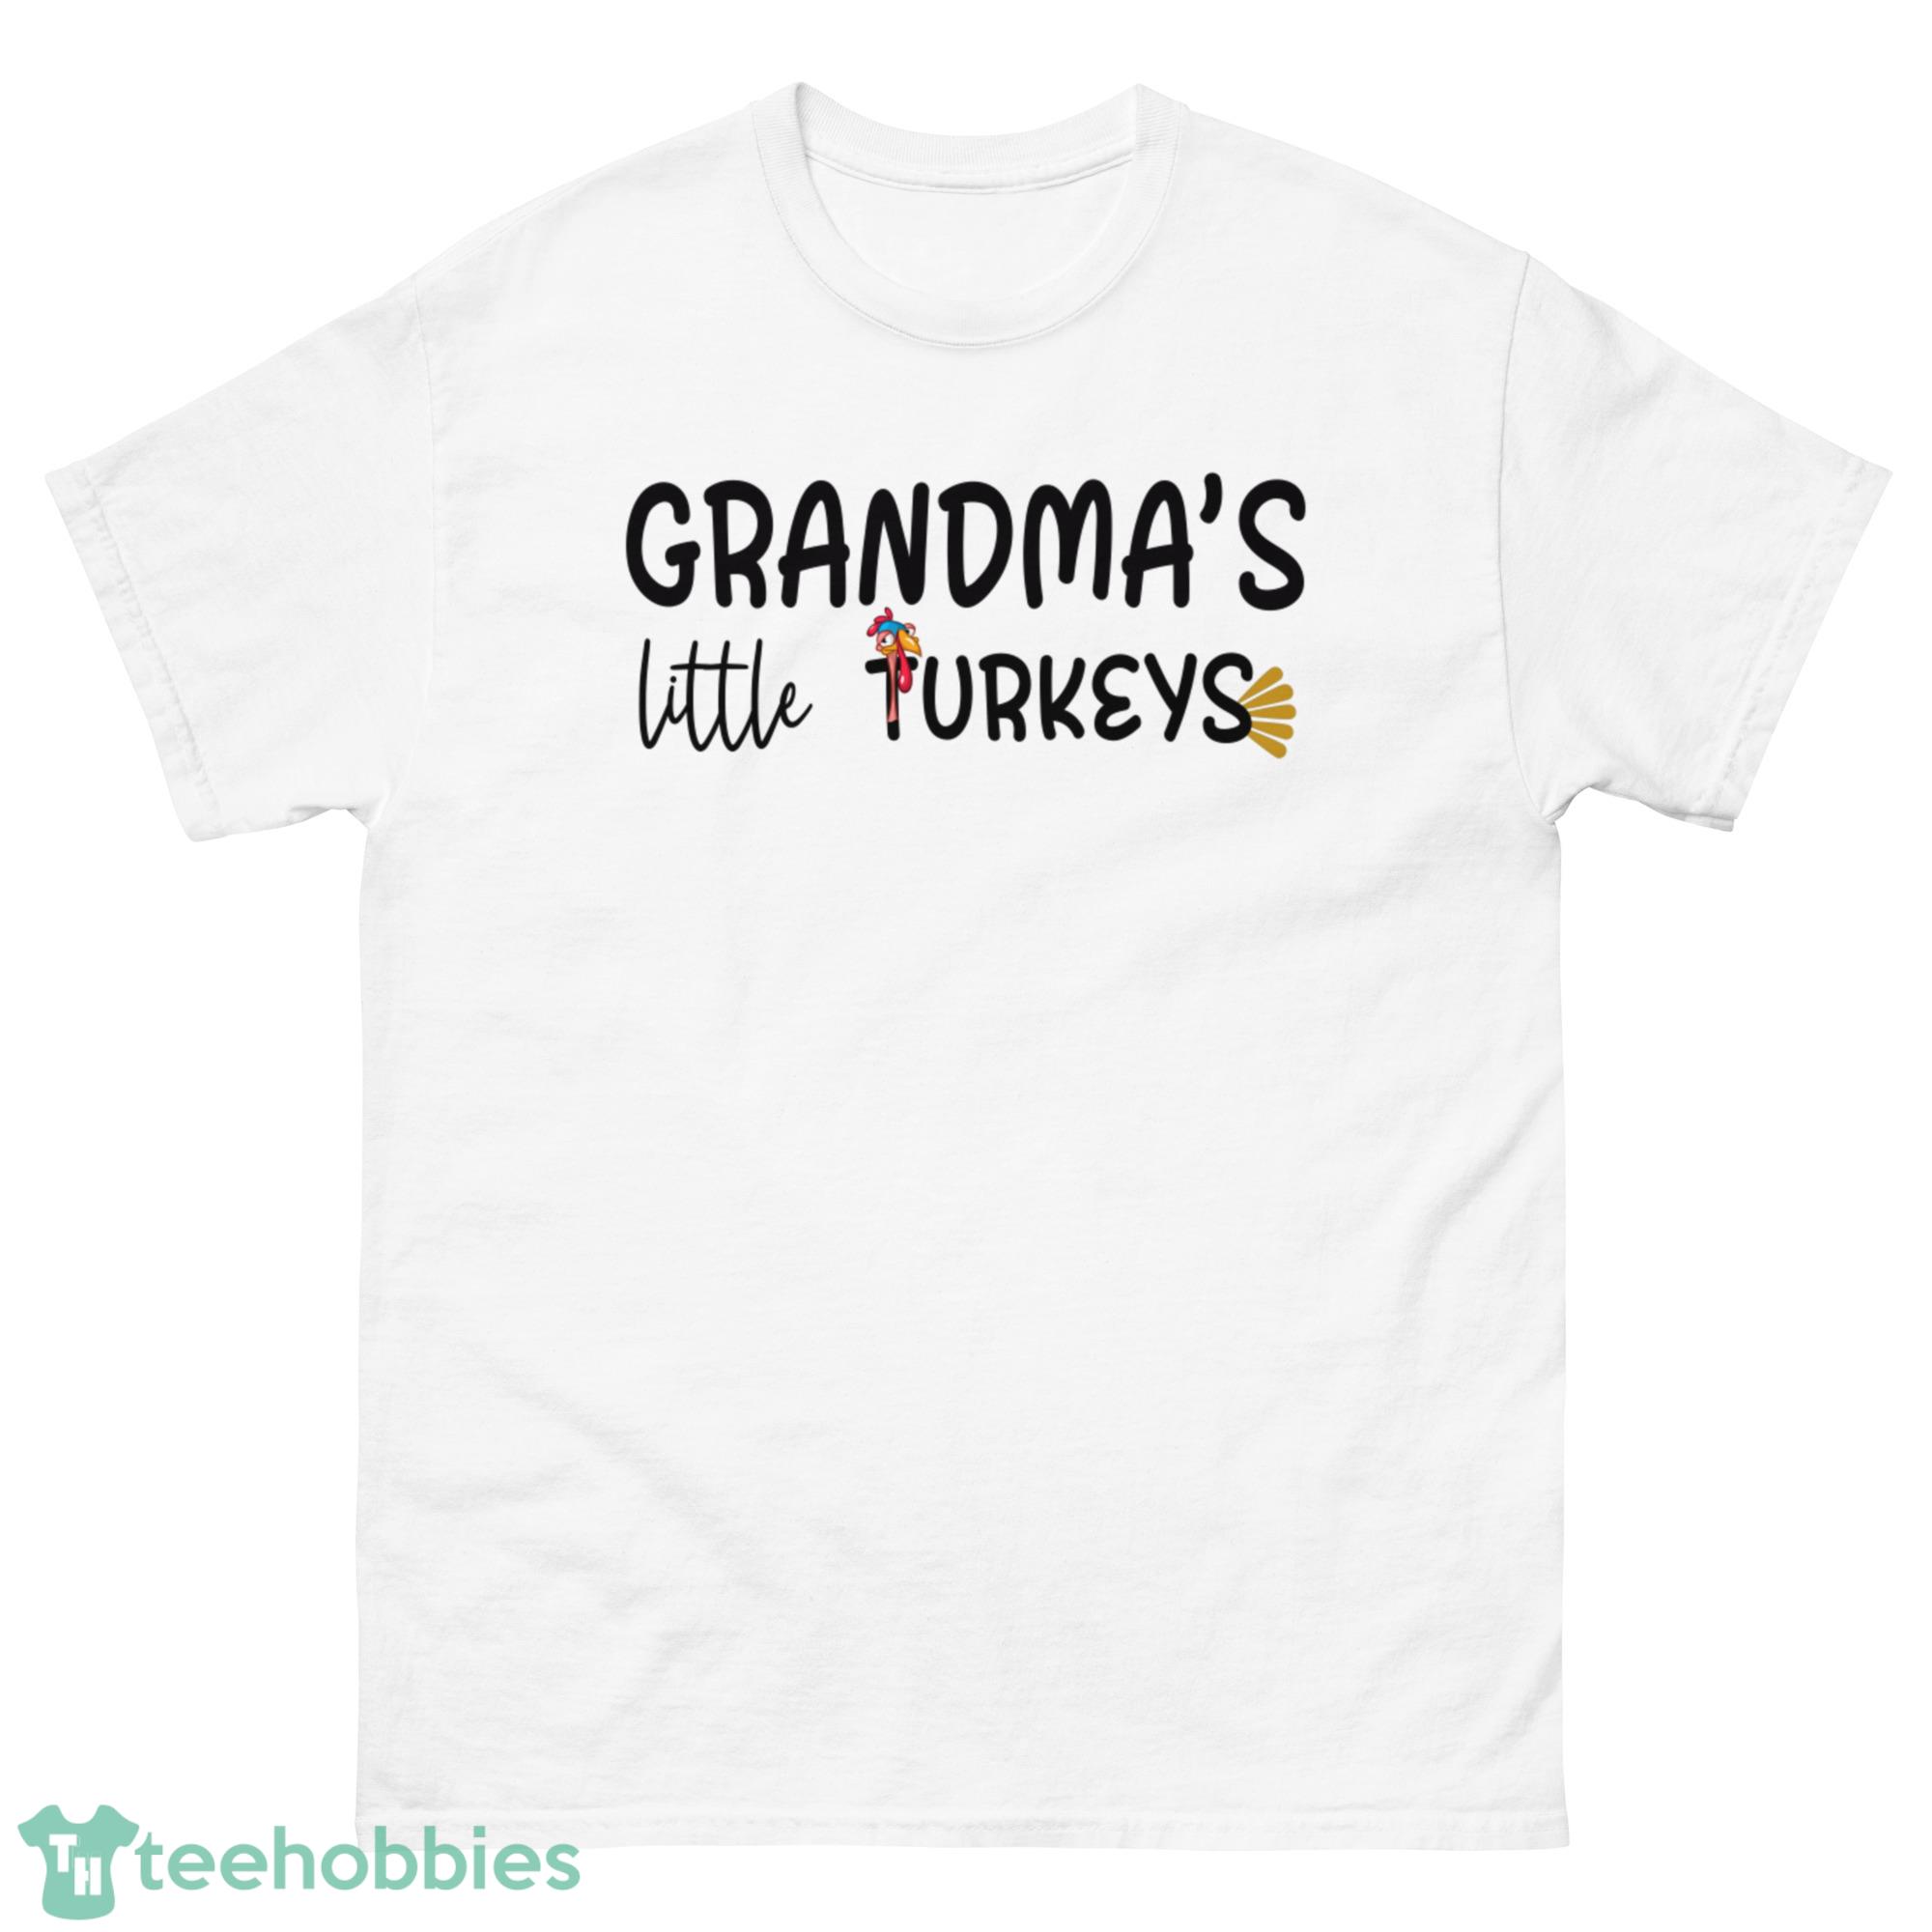 Grandma's Little Turkeys Personalized Title Thanks Giving Shirt - G500 Men’s Classic T-Shirt-1